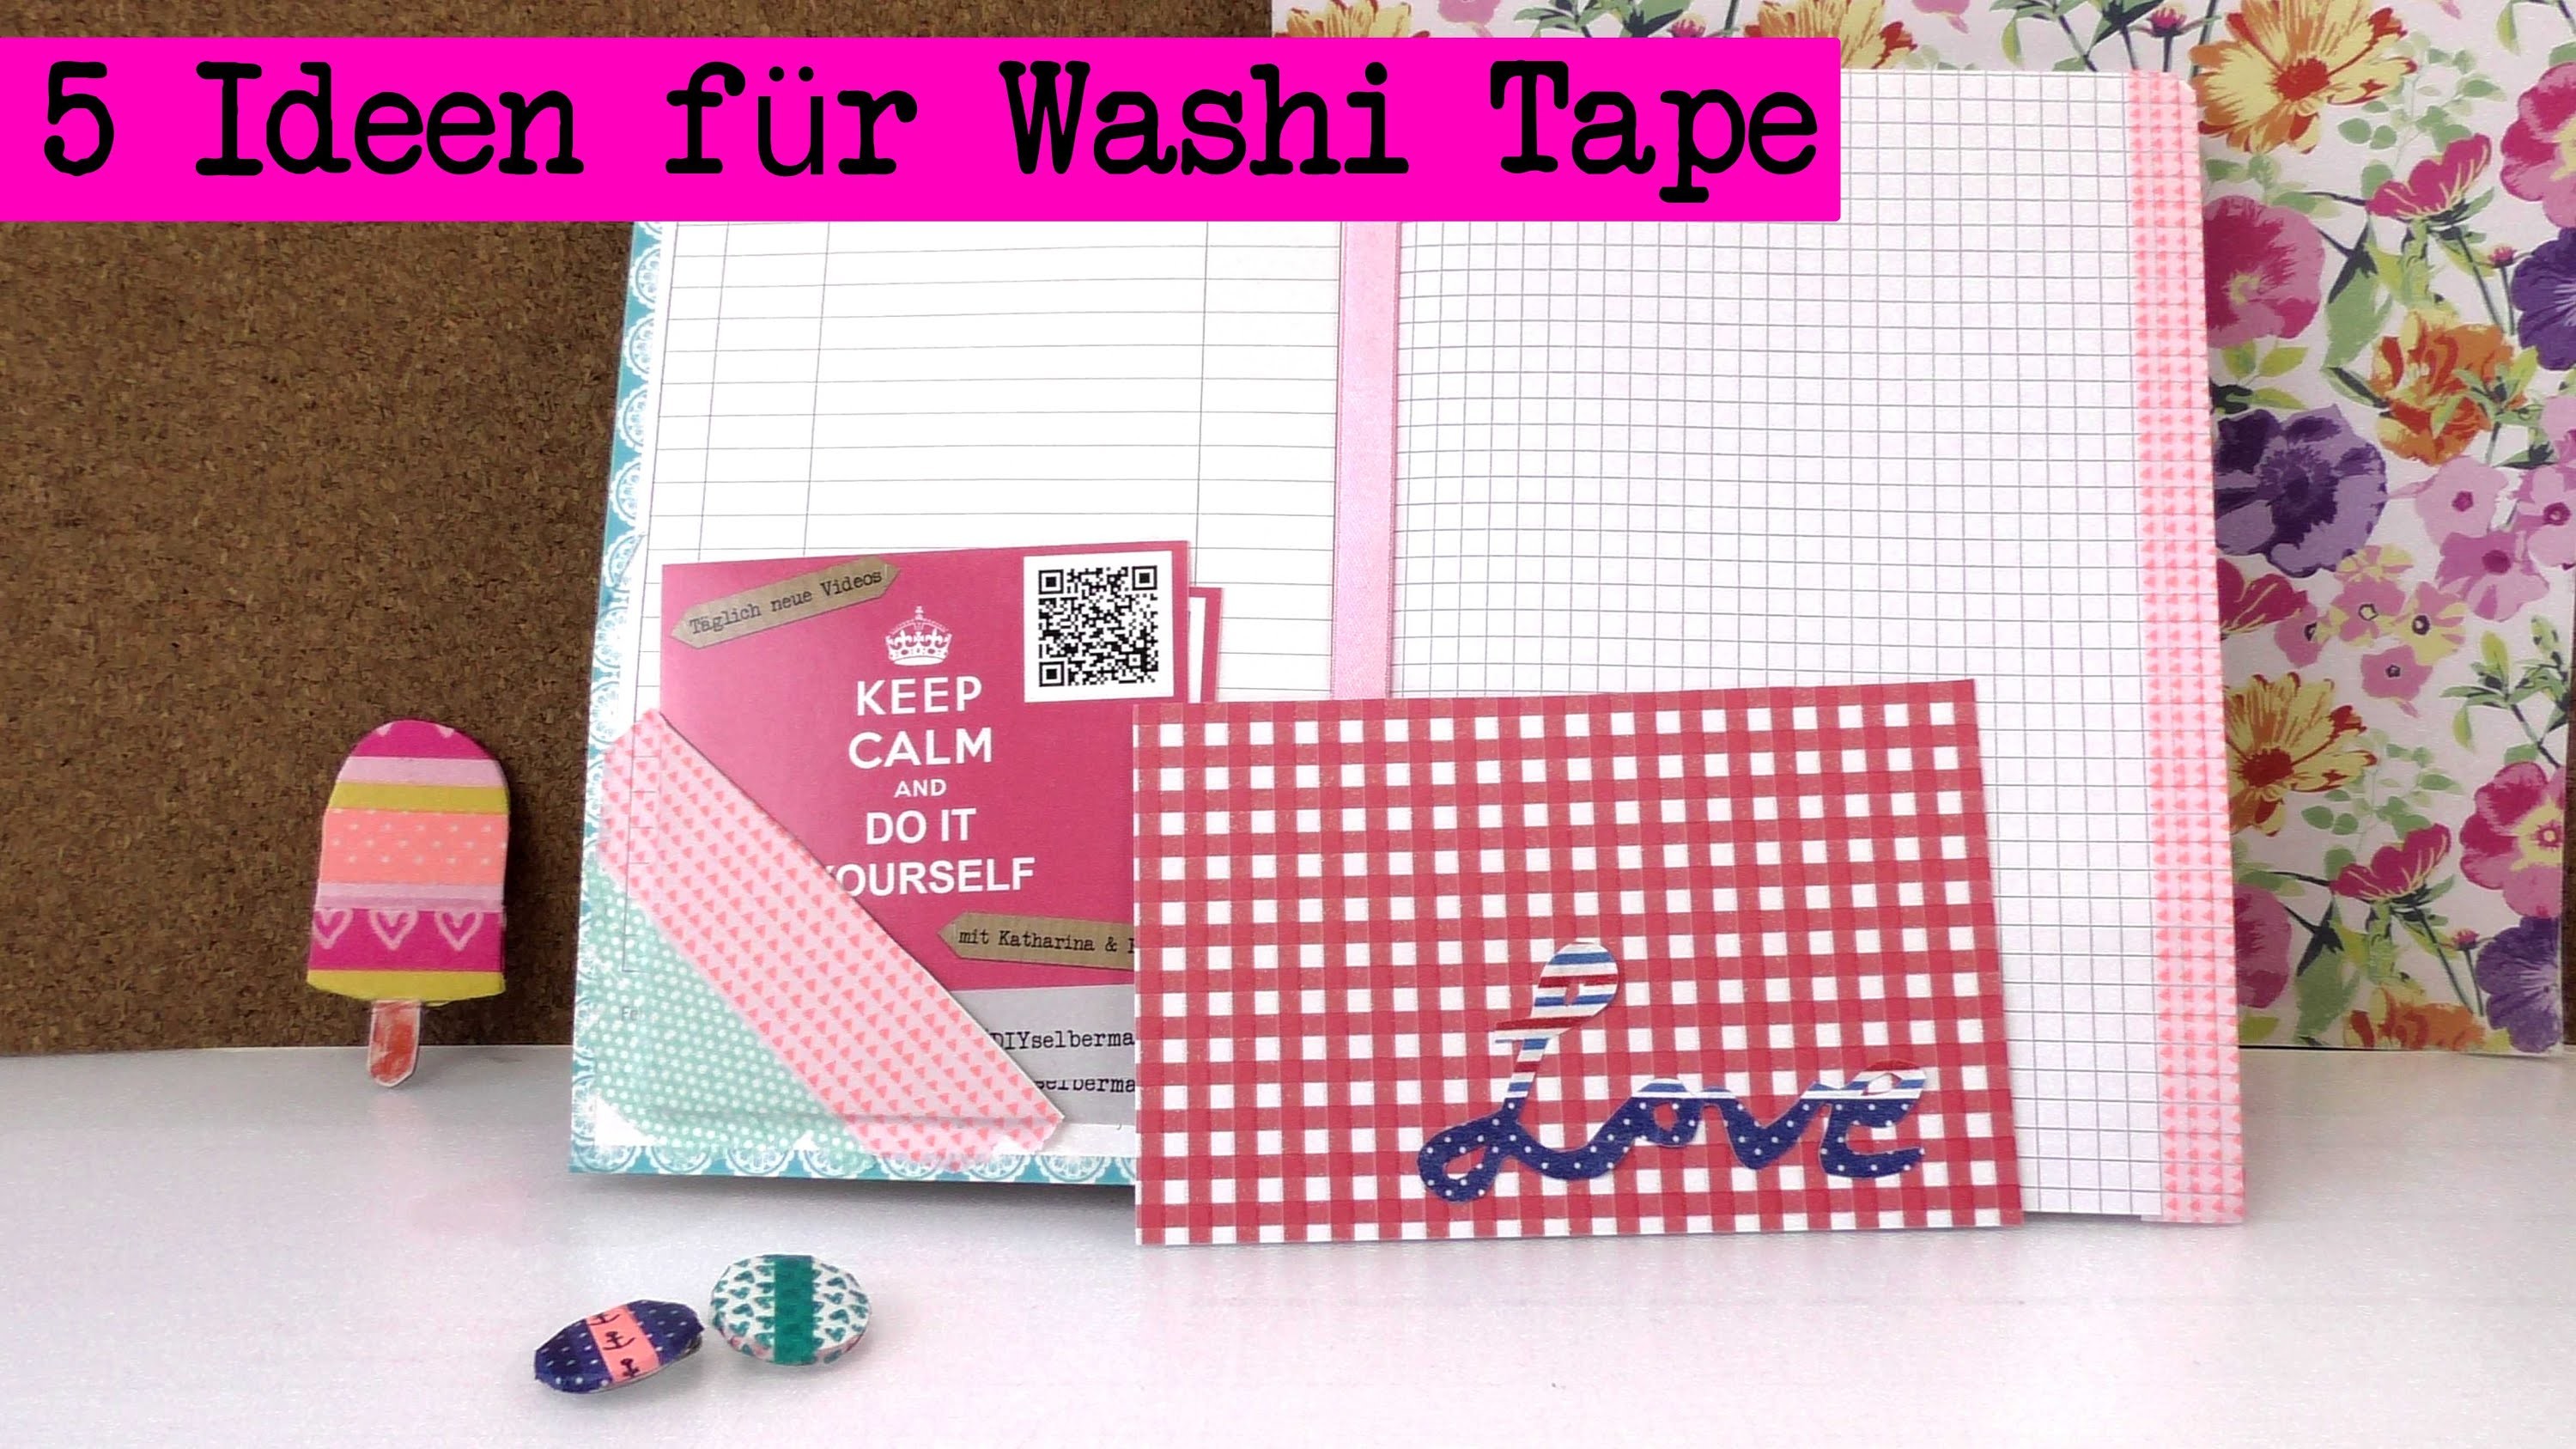 DIY Washi Tape Ideen - Kathis 5 neue Ideen mit Washi Tape Tutorials